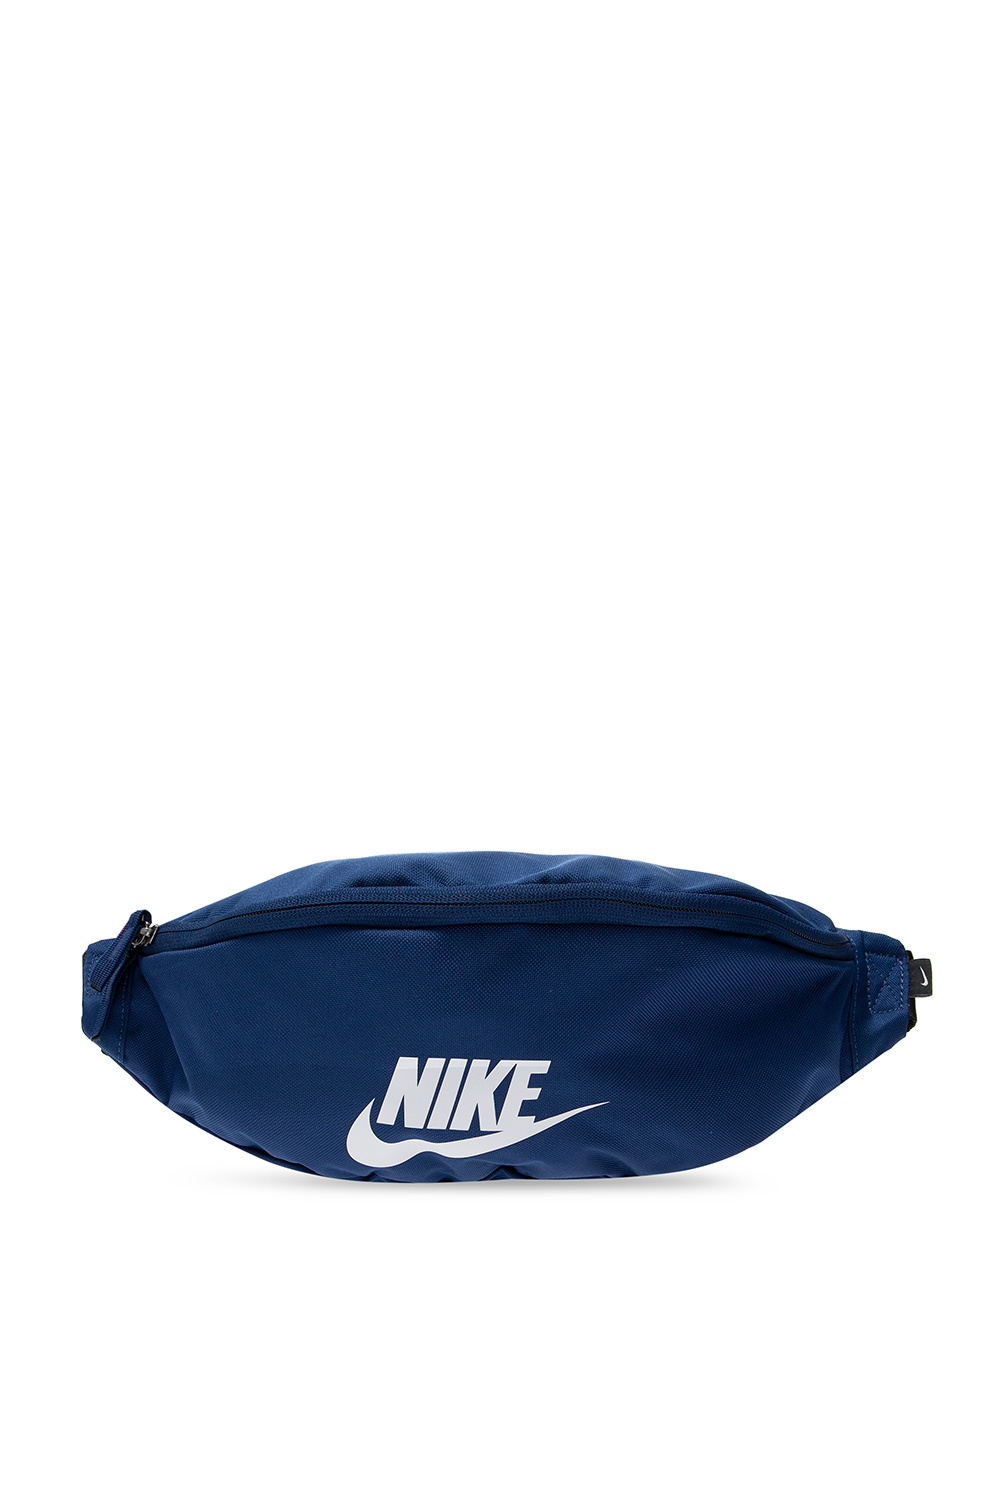 pereza como eso origen Branded belt bag Nike - nike sb cat scratch black and blue shoes -  IetpShops Guatemala